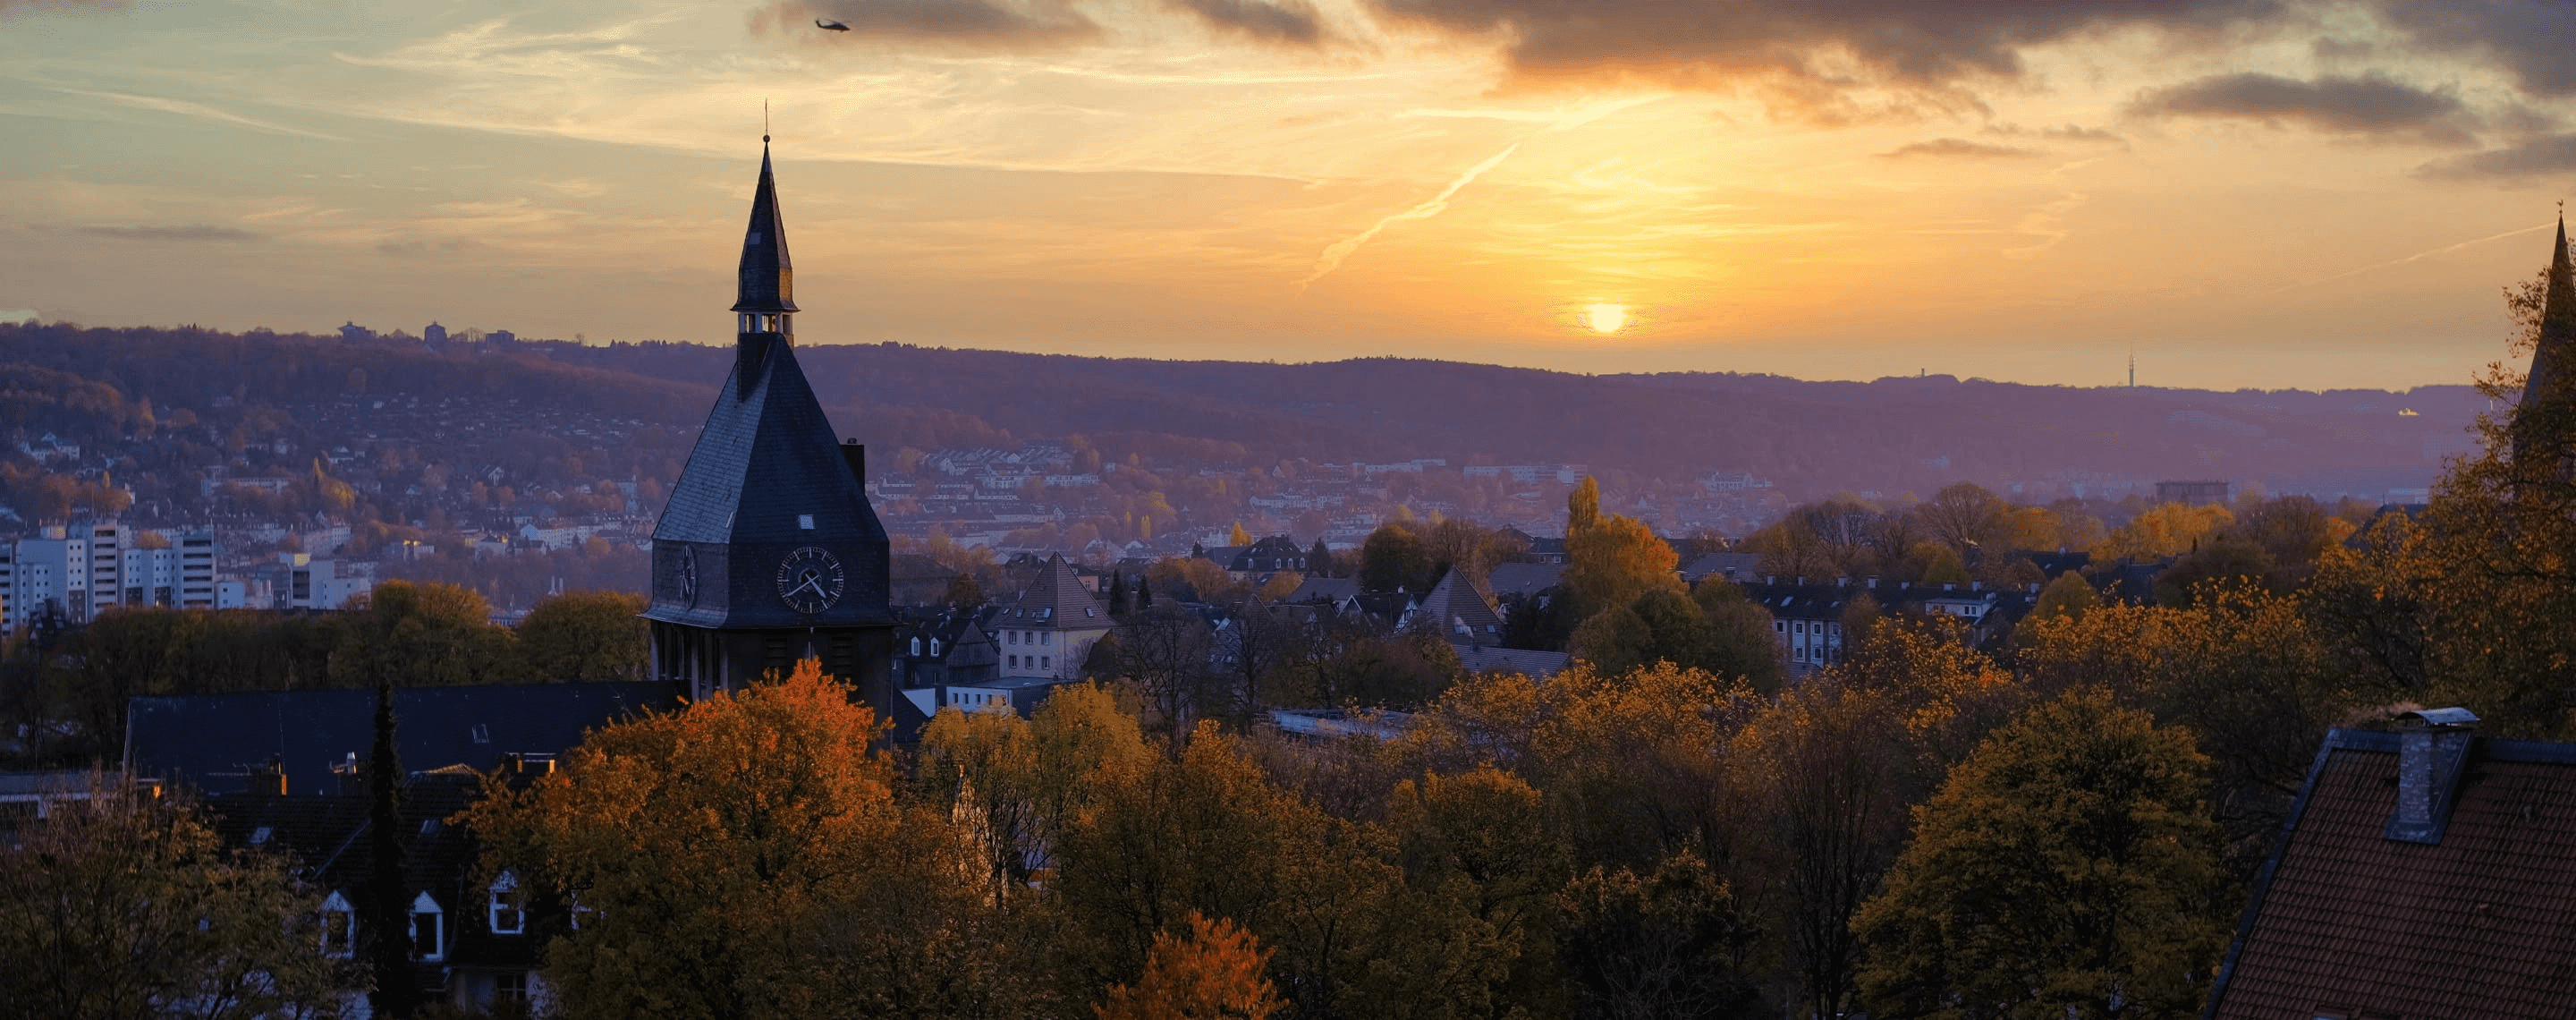 Panoramablick auf Wuppertal im Sonnenuntergang